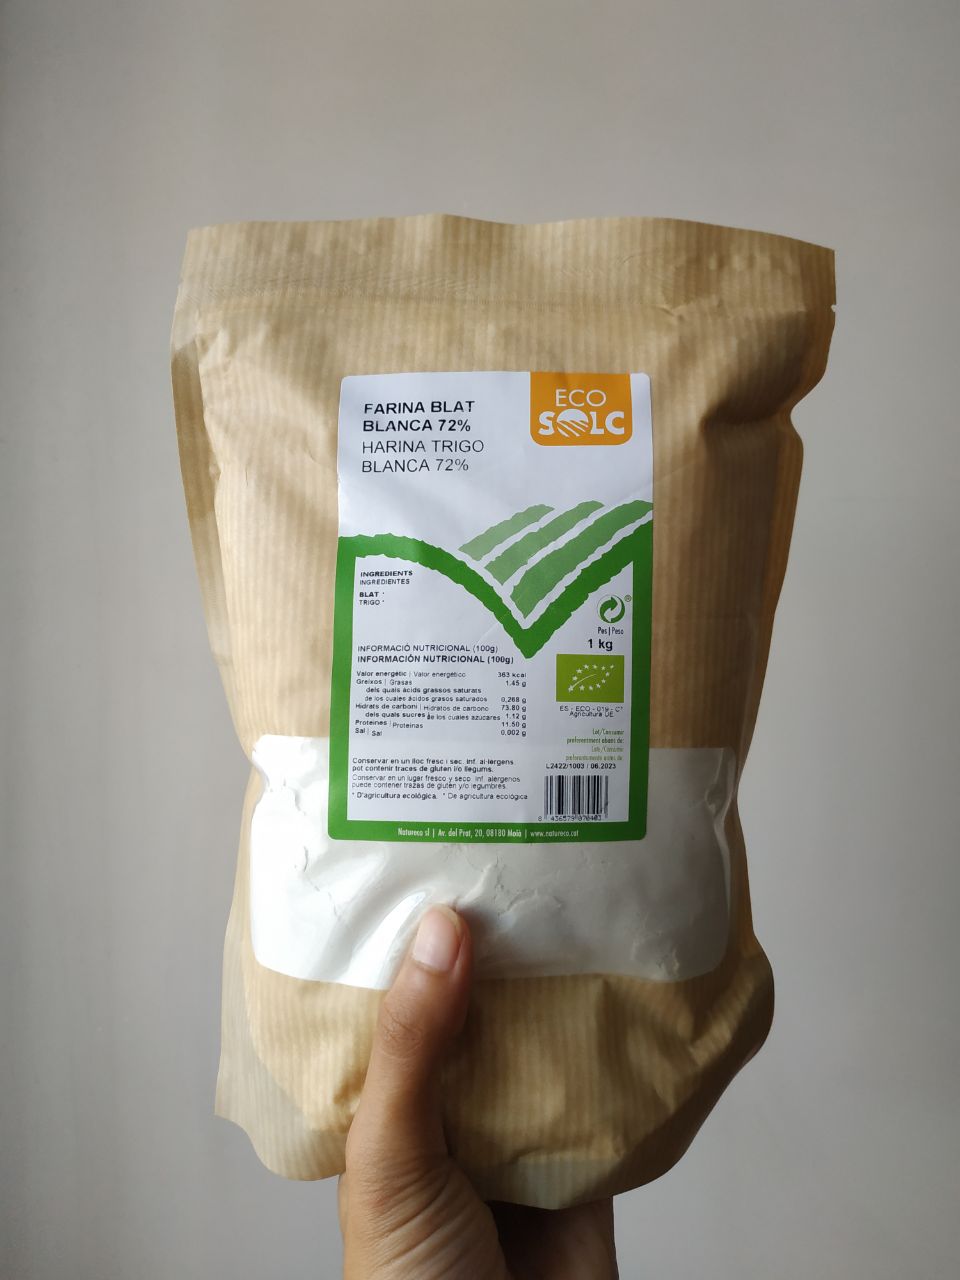 Farina blat blanca (1kg)-image